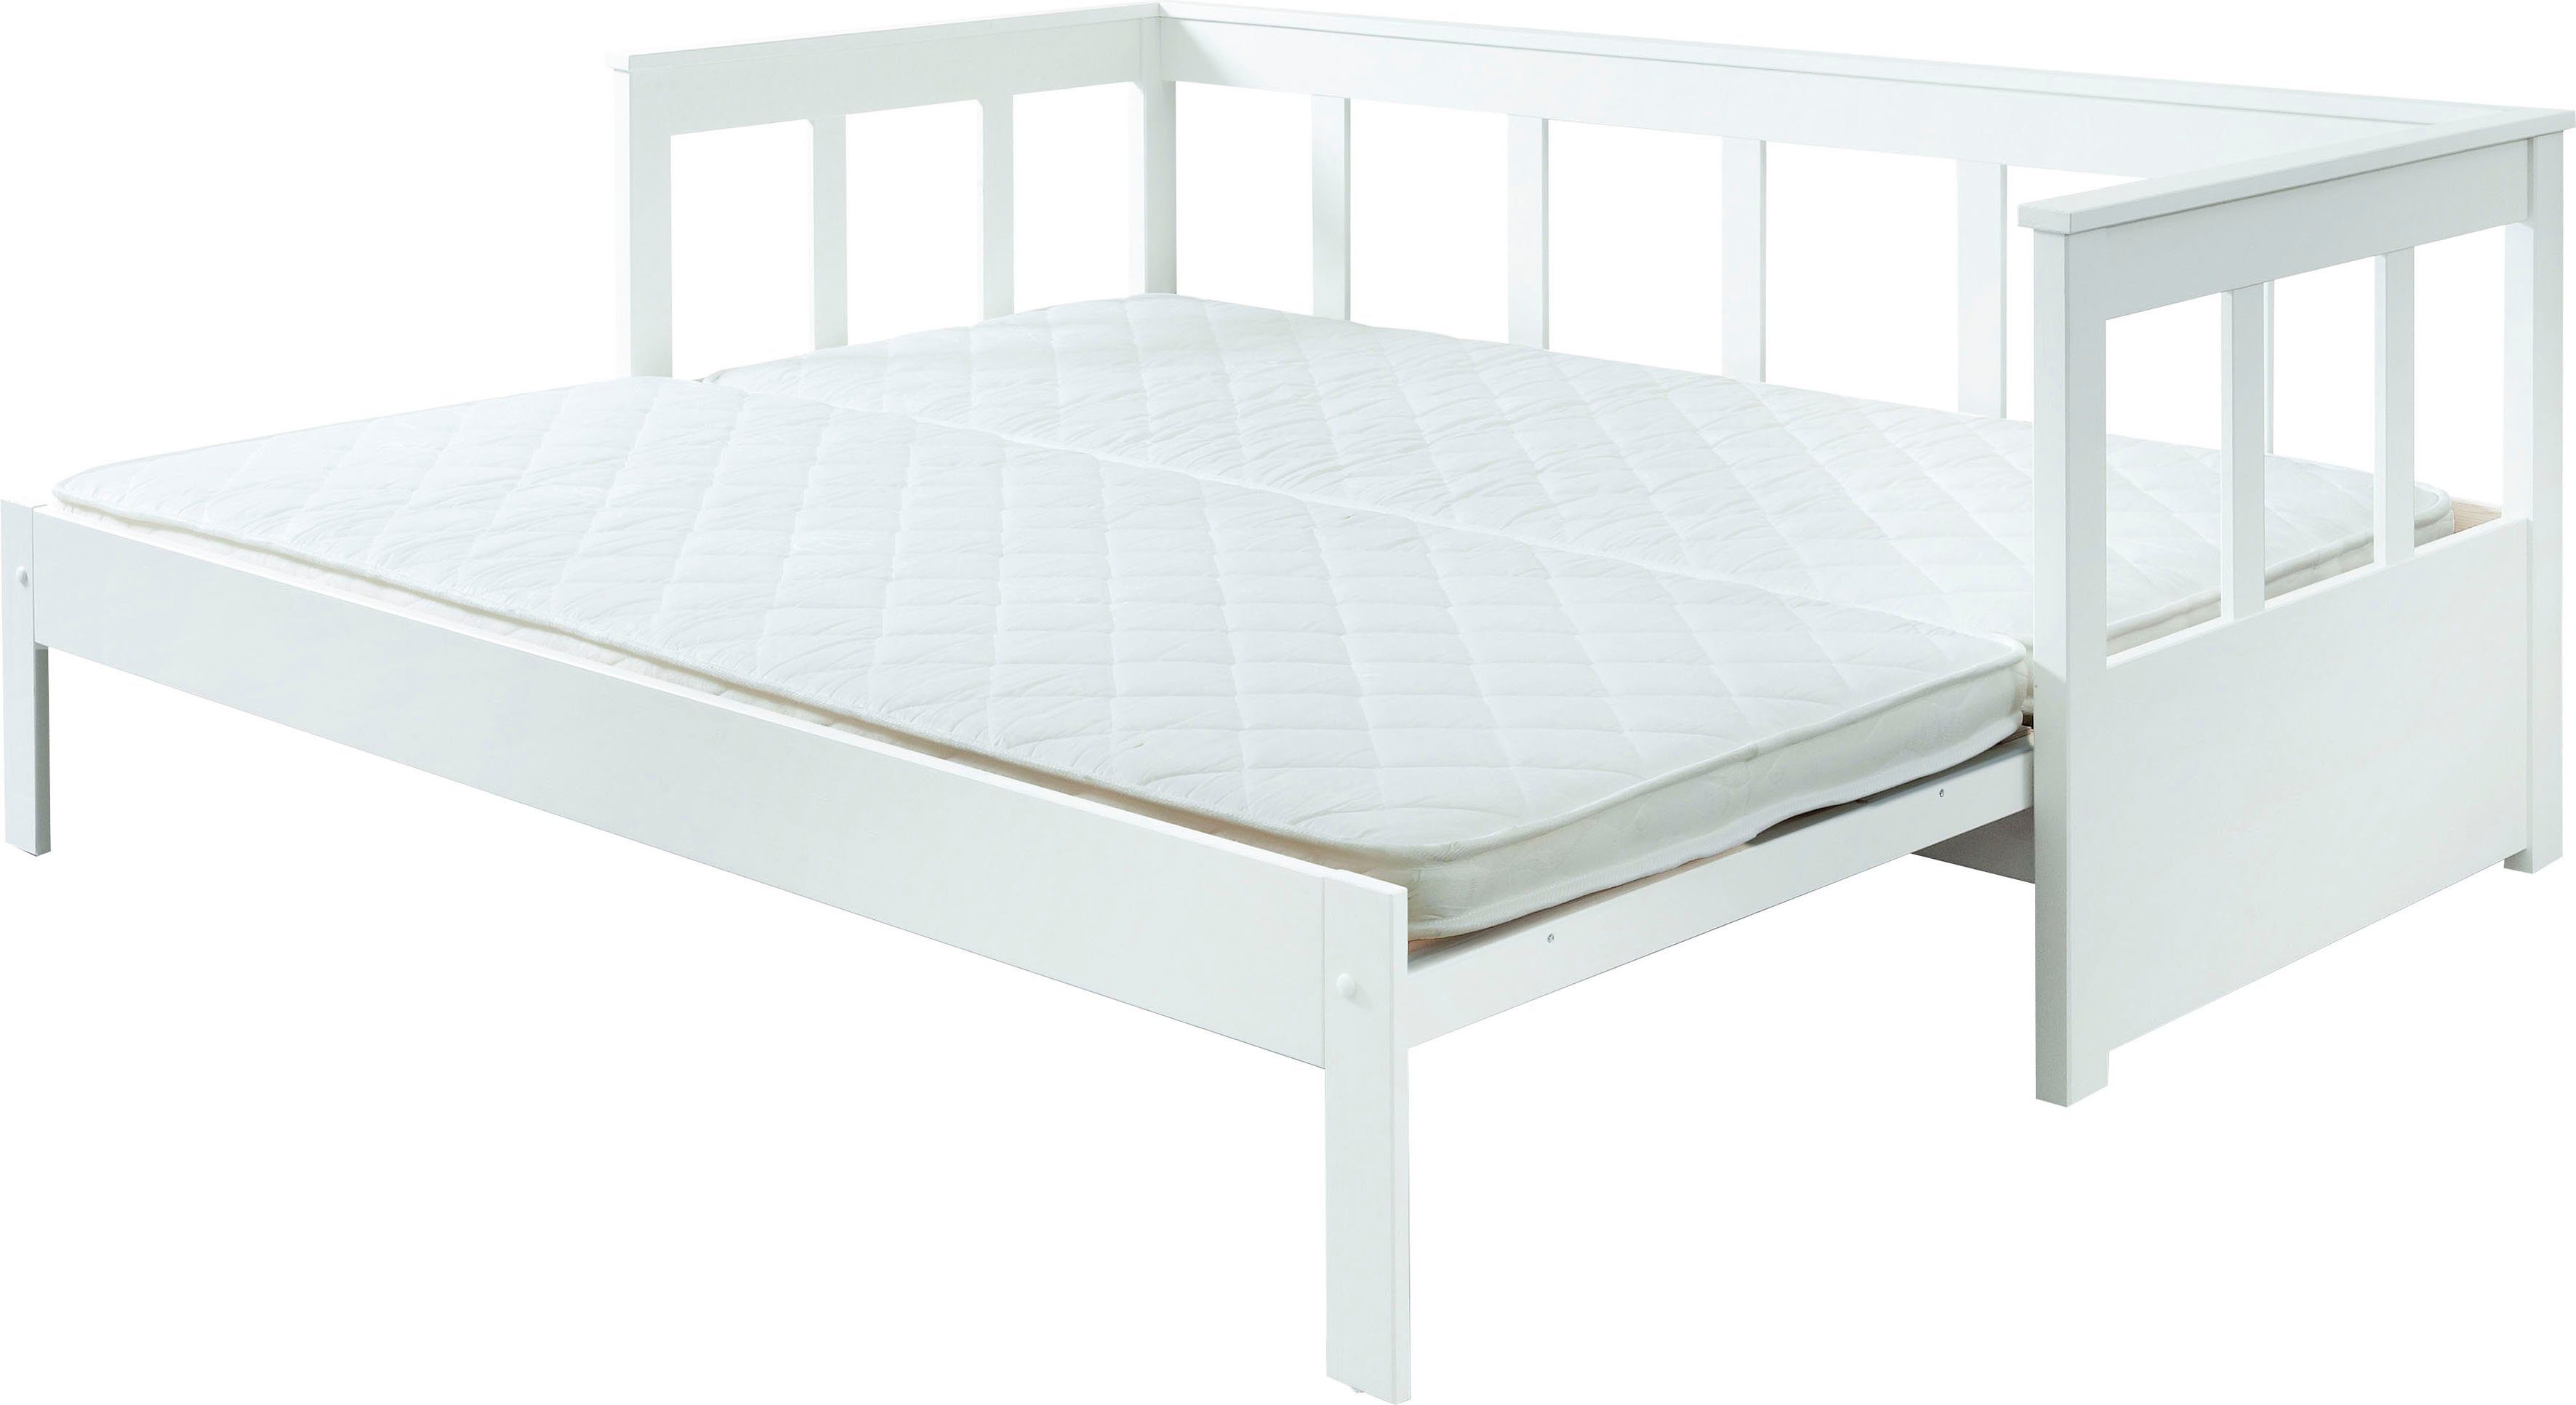 Vipack Bett zum mit cm ausziehen Pino, Sprossen, LF Vipack auf 180x200 90x200 Kojenbett cm